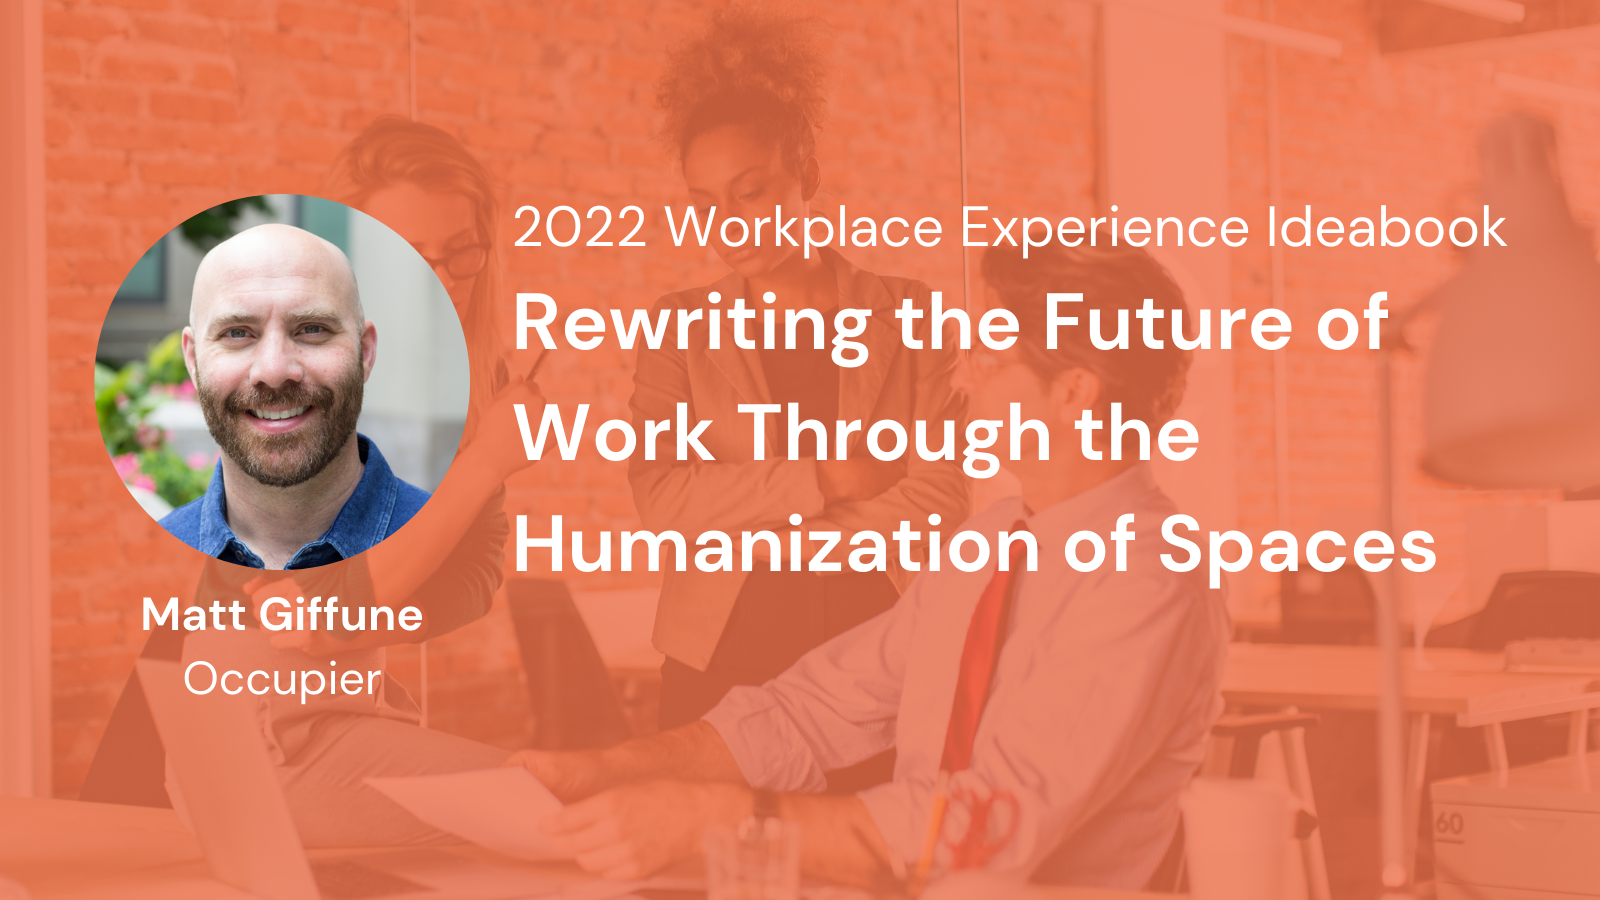 Rewriting the Future of Work Through The Humanization of Spaces - Matt Giffune